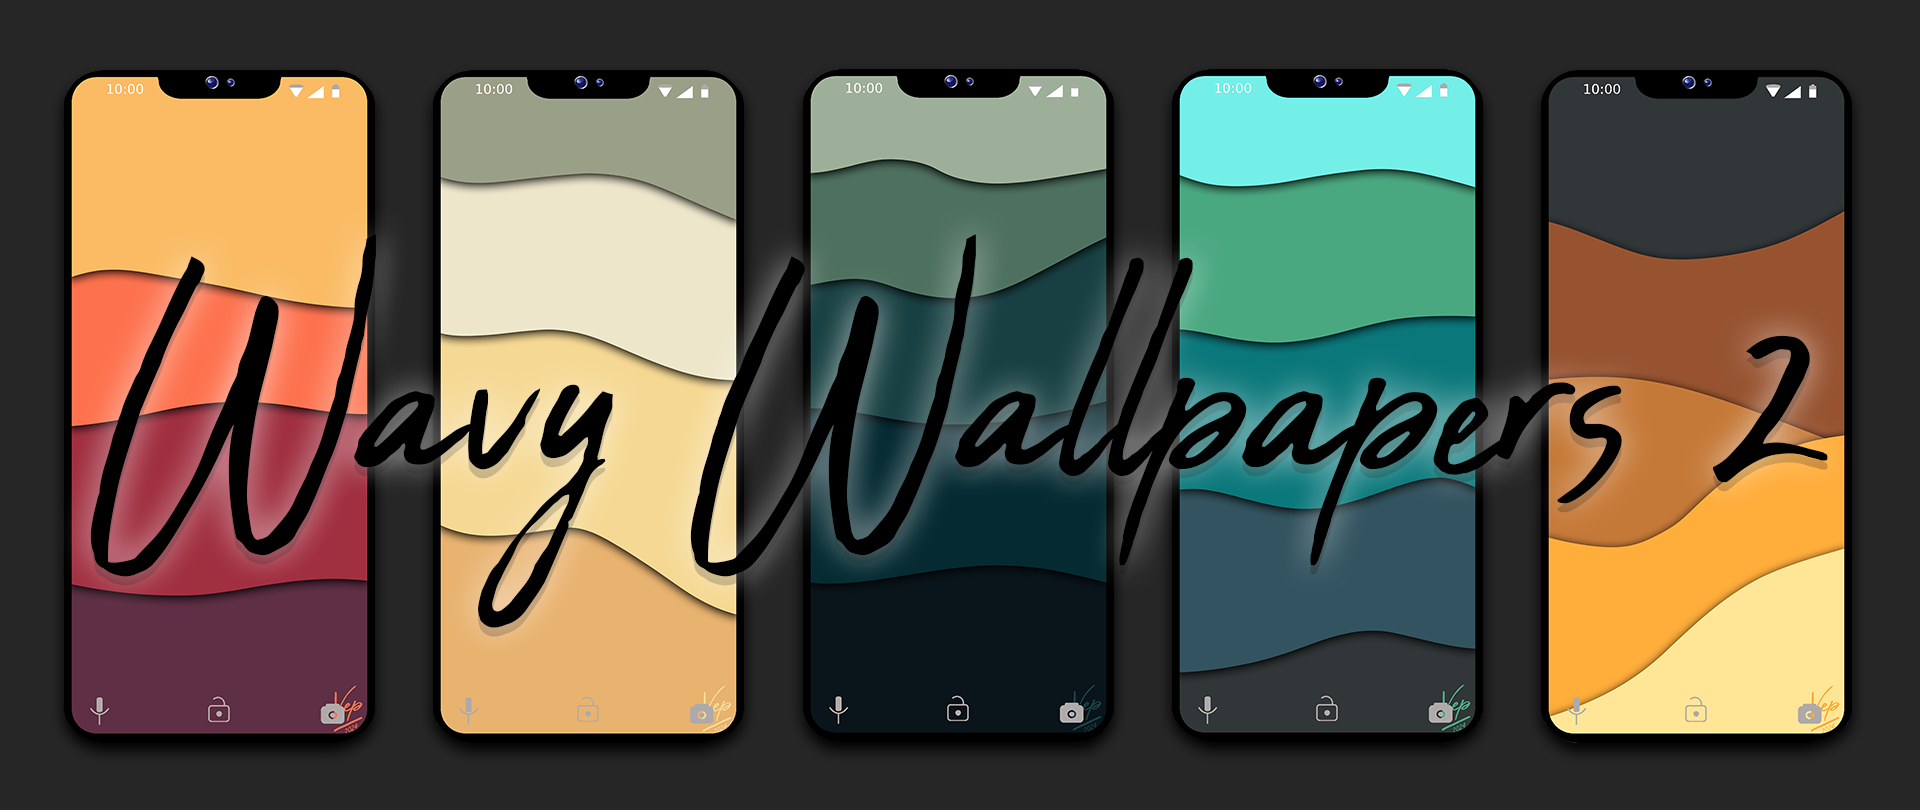 Wavy Wallpapers 2